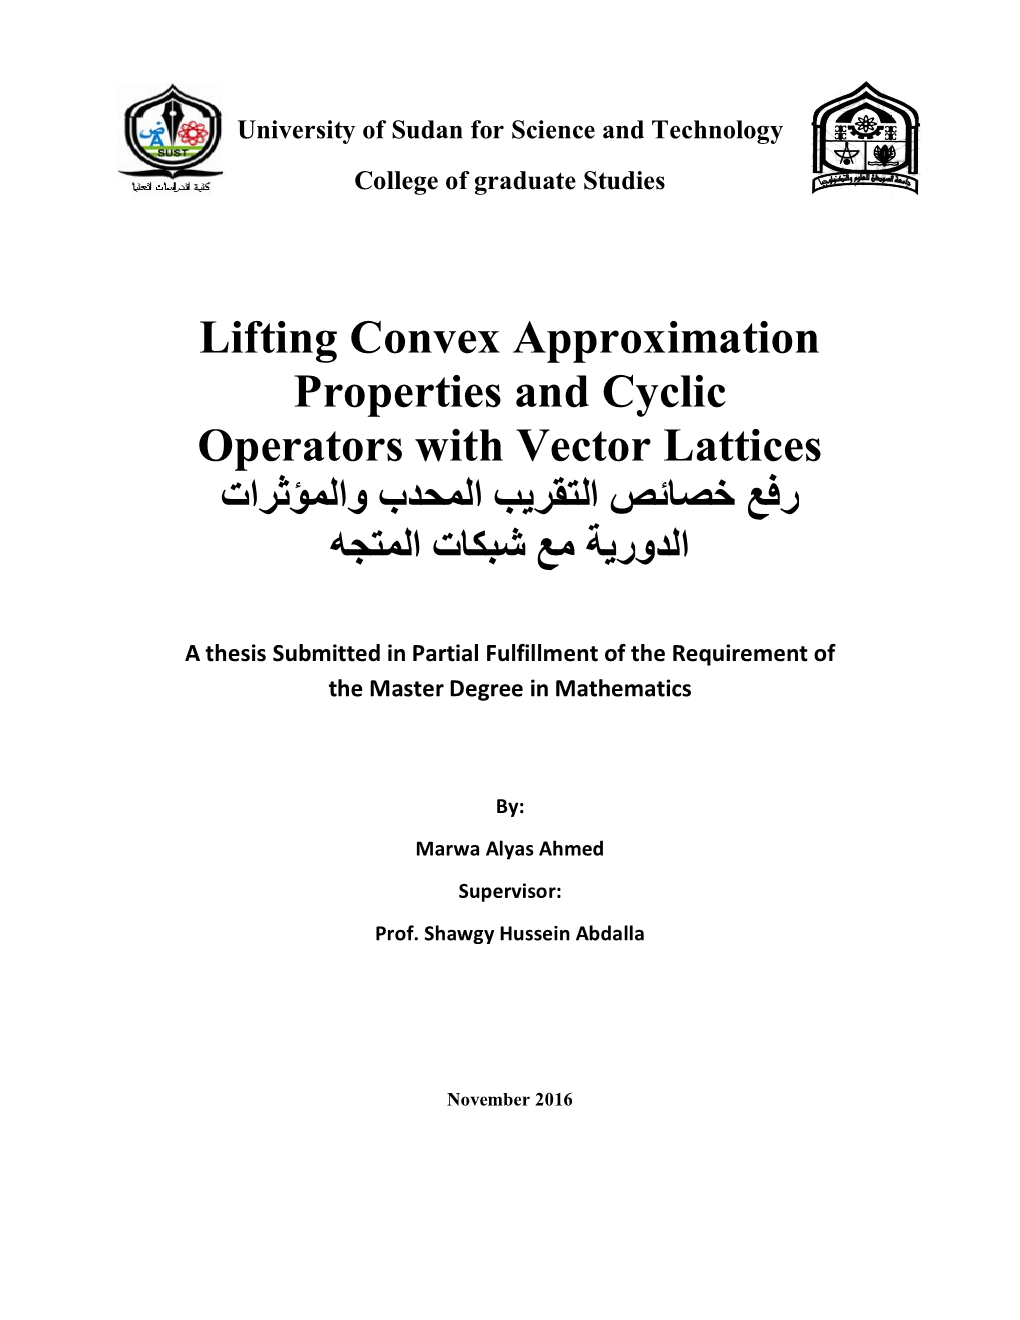 Lifting Convex Approximation Properties and Cyclic Operators with Vector Lattices رﻓﻊ ﺧﺼﺎﺋﺺ اﻟﺘﻘﺮﯾﺐ اﻟﻤﺤﺪب واﻟﻤﺆﺛﺮات اﻟﺪورﯾﺔ ﻣﻊ ﺷﺒﻜﺎت اﻟﻤﺘﺠﮫ